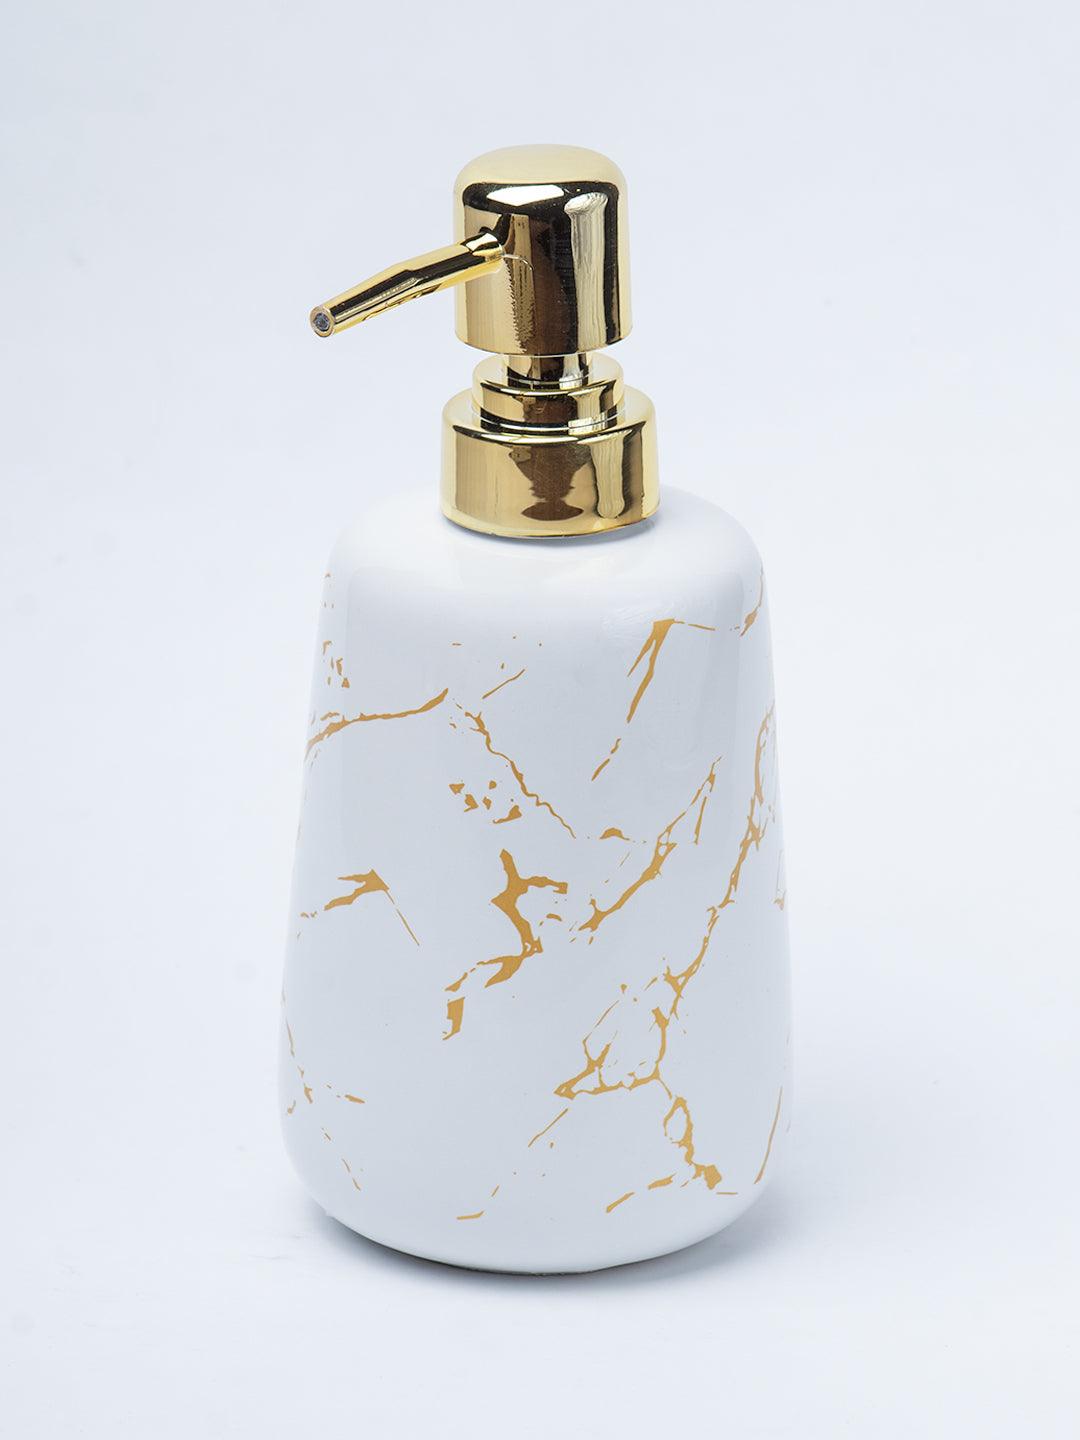 Off White Ceramic Liquid Soap Dispenser - Stone Finish, Bath Accessories - 2